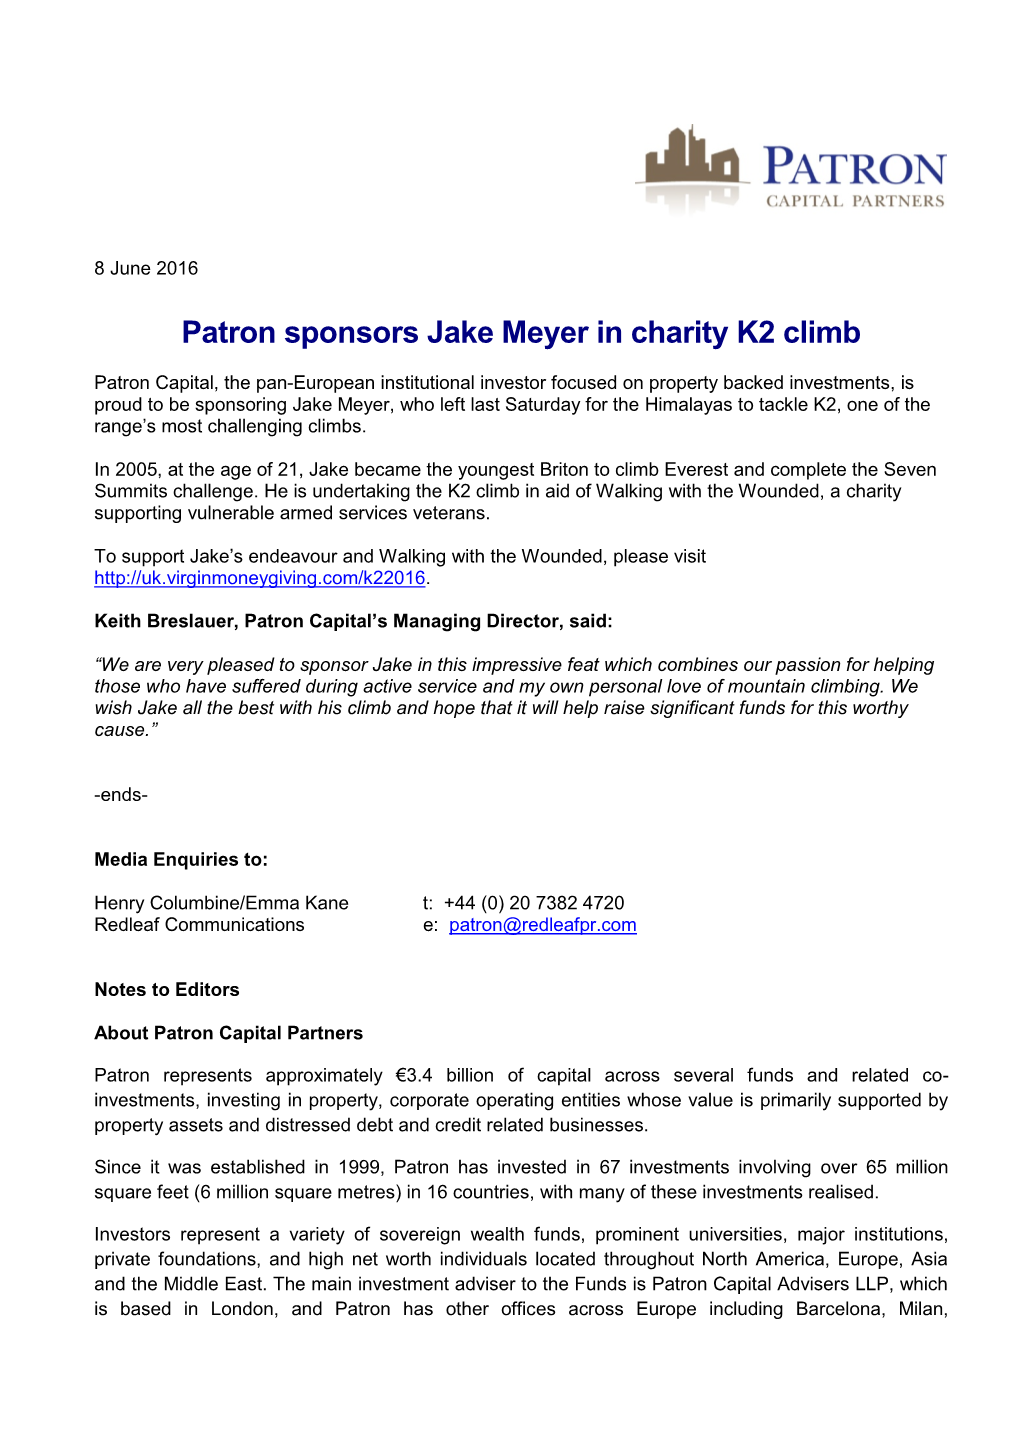 Patron Sponsors Jake Meyer in Charity K2 Climb